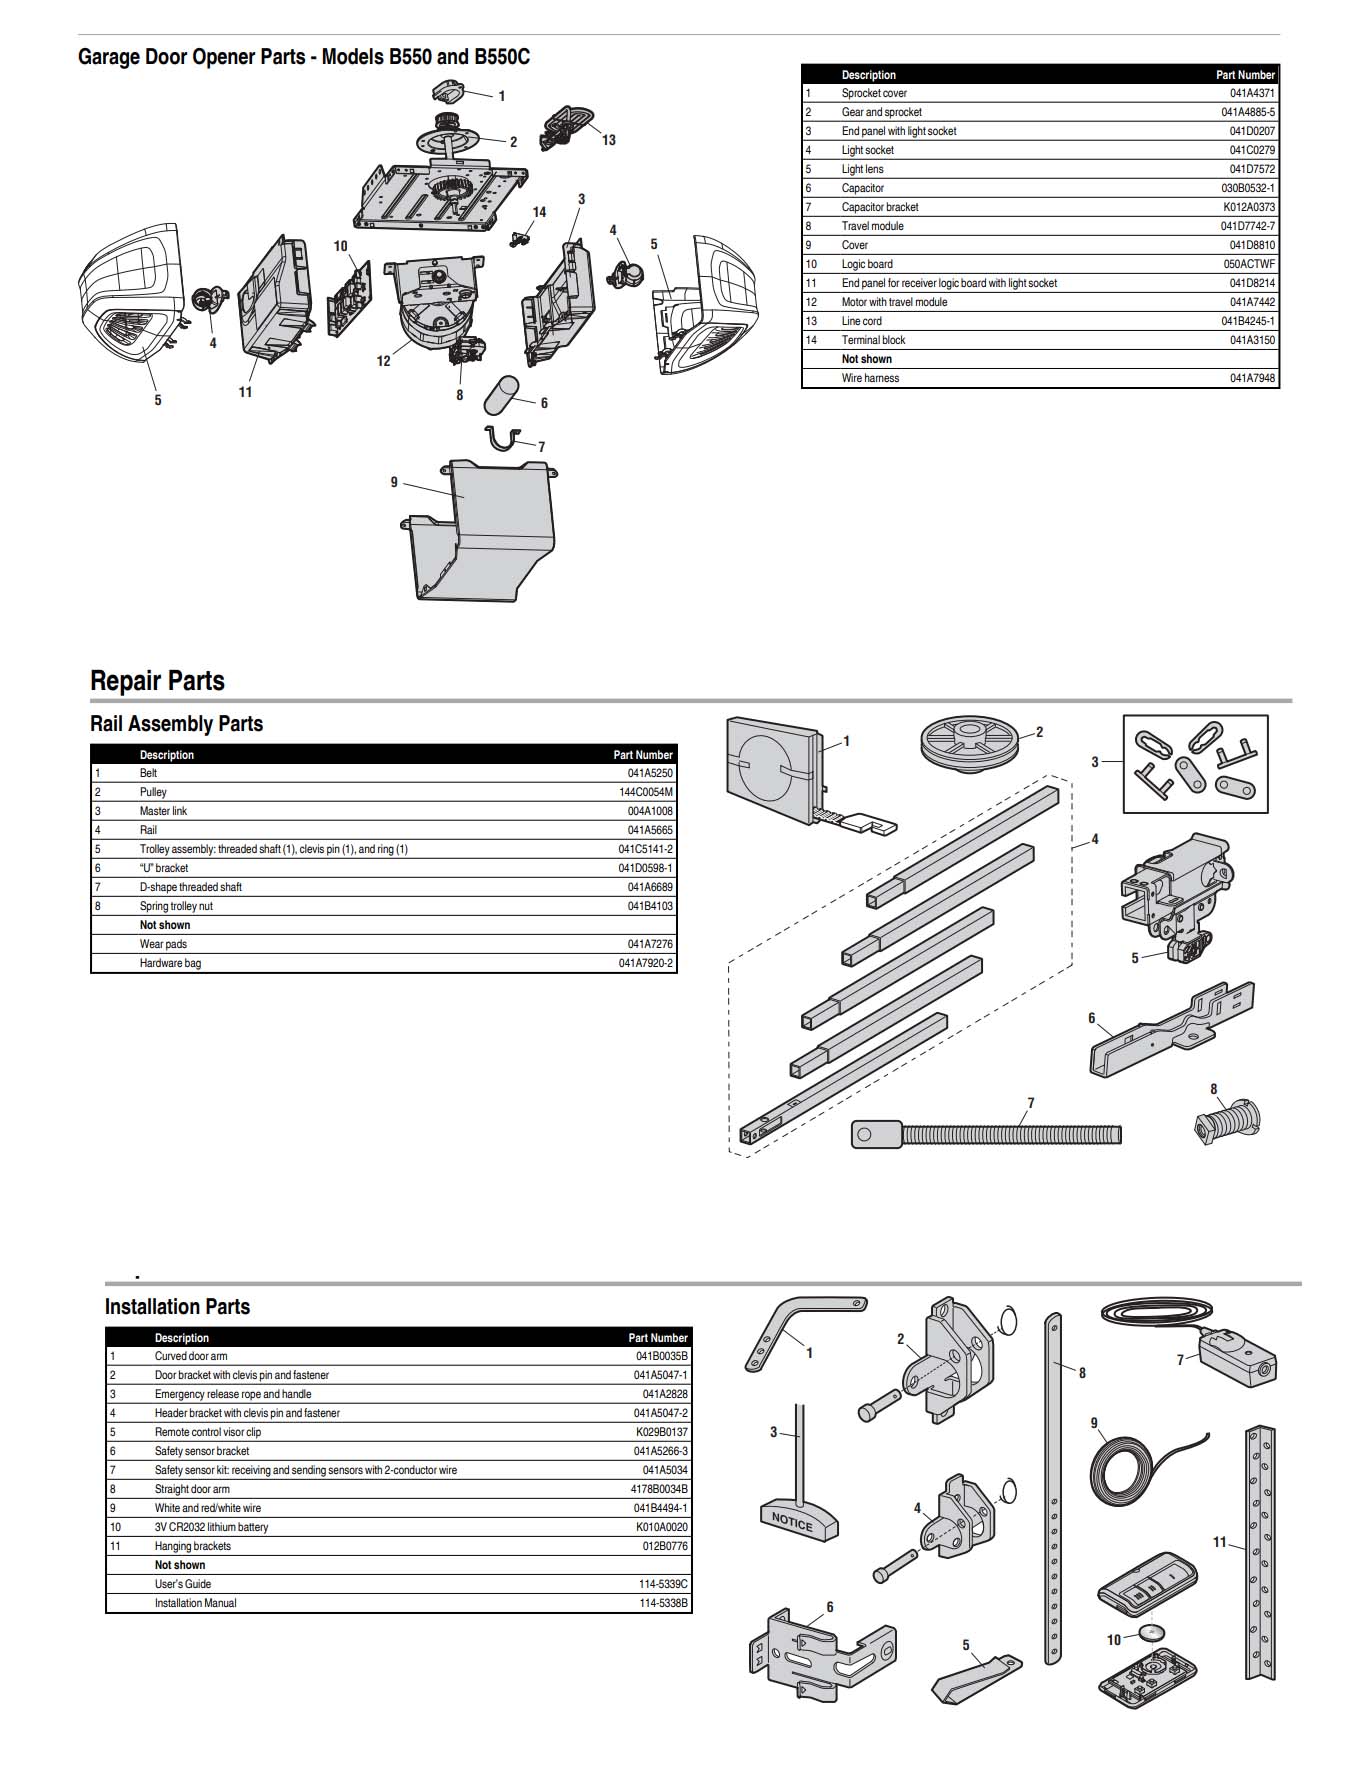 Chamberlain B550 and B550C Garage Door Opener Parts Diagram and List